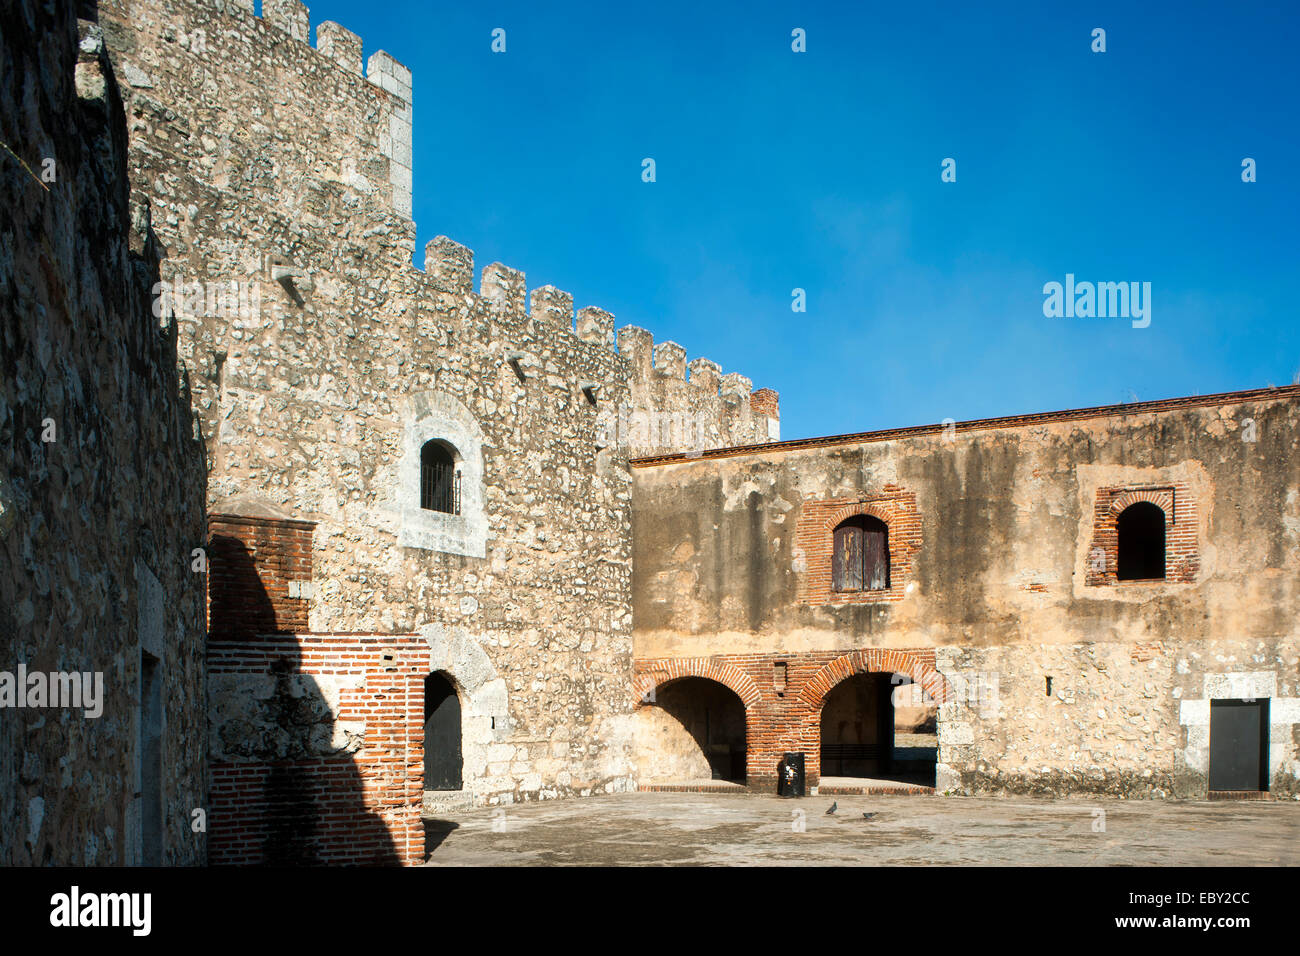 Dominikanische Republik, Santo Domingo, Fortaleza Ozama, Festung, Torre del Homenaje (Flussseite, Riverside) Foto Stock